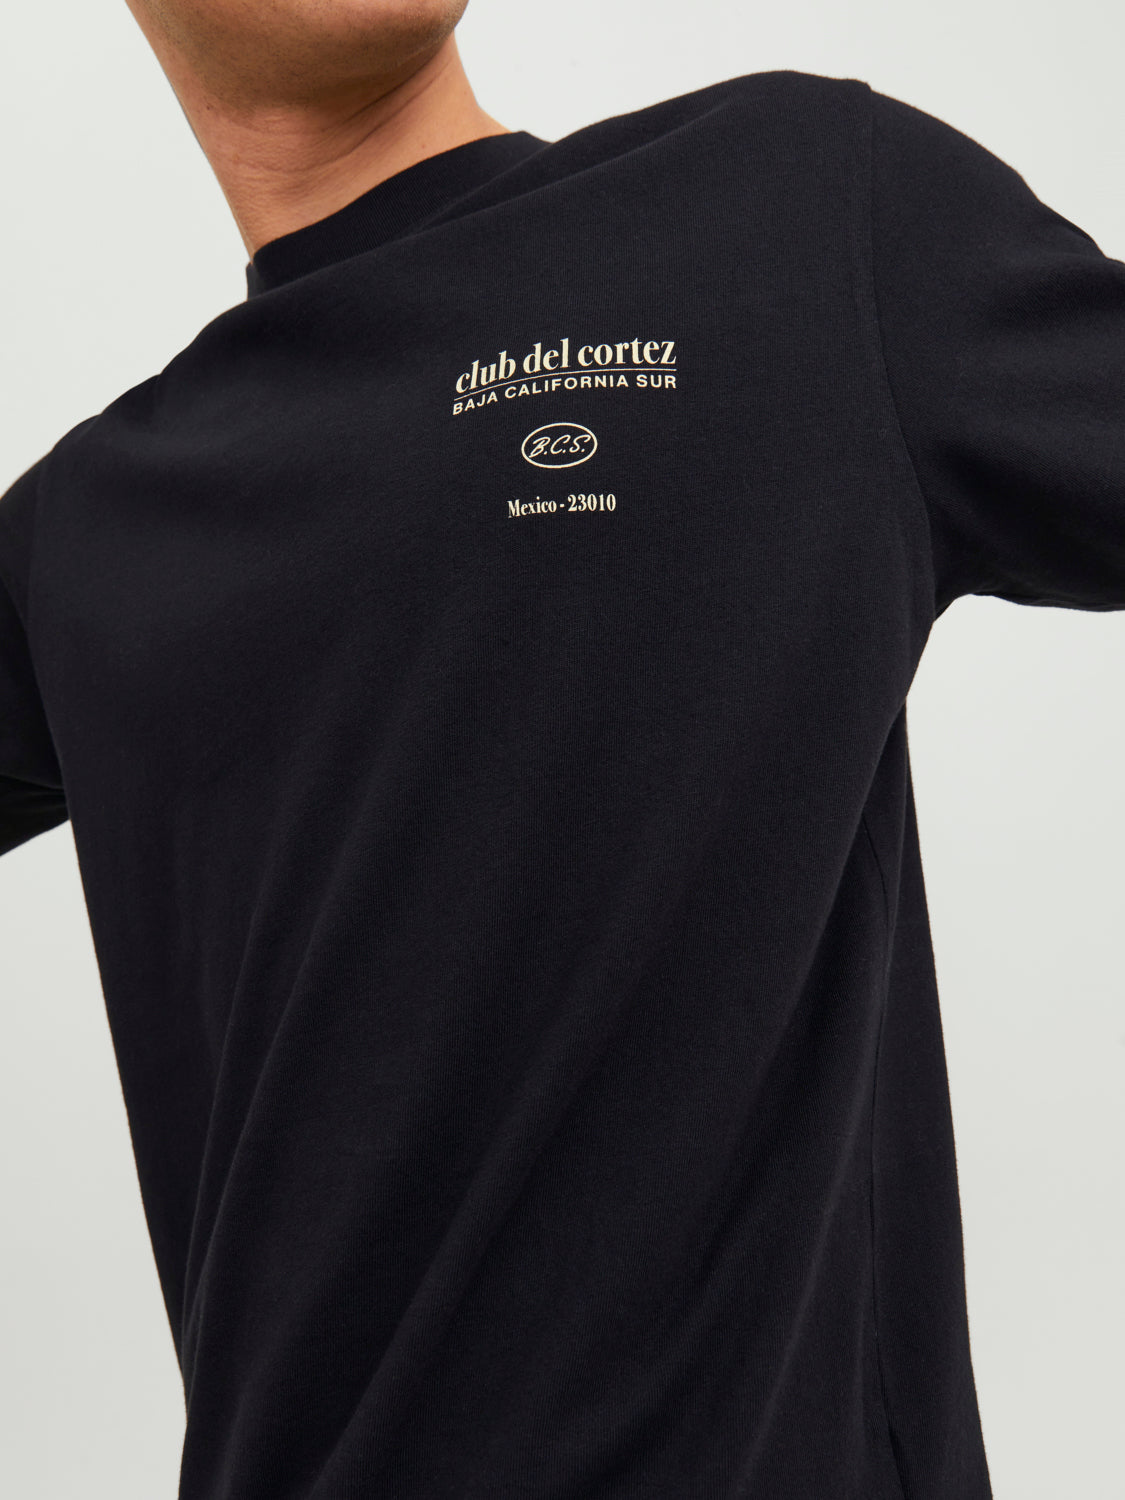 JORBELMONTBACK T-Shirt - Black